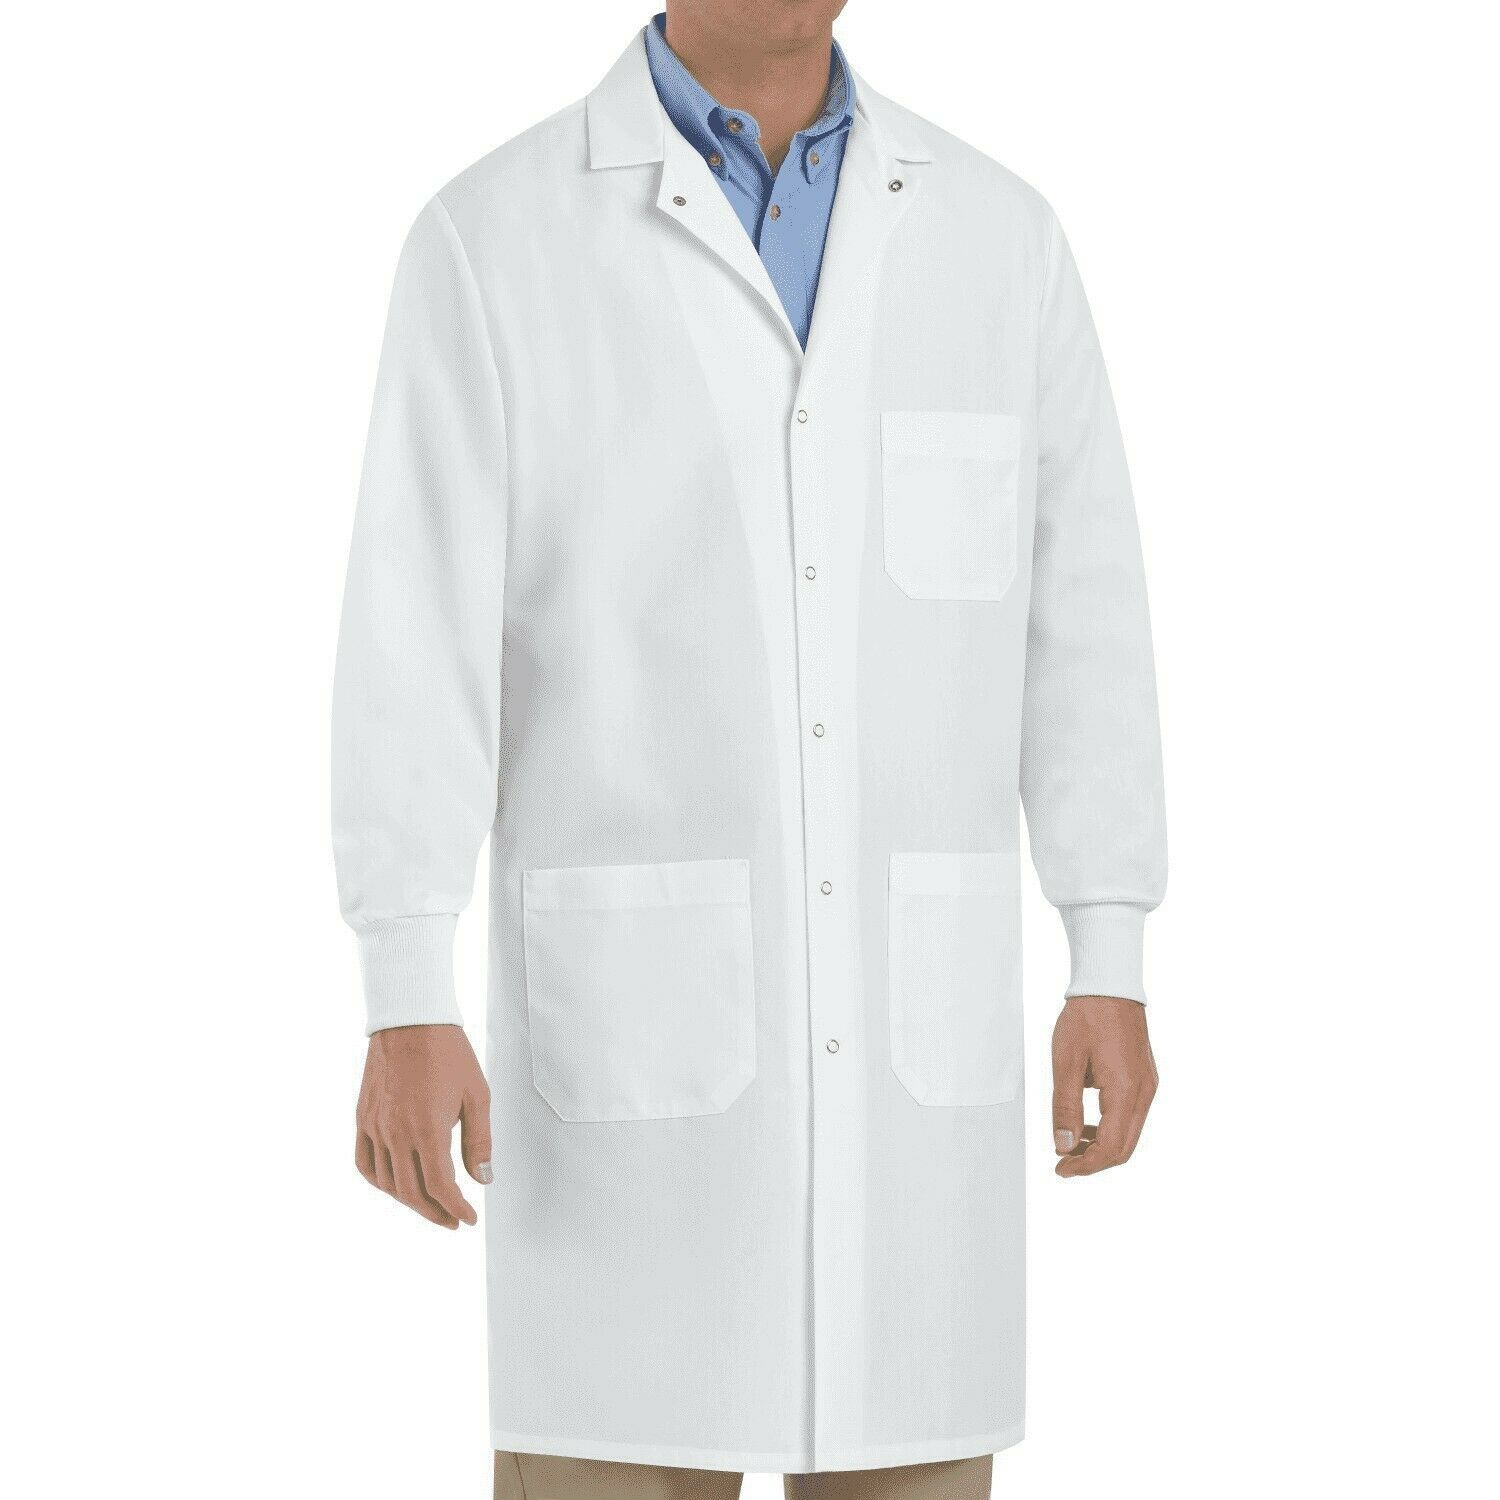 Brand New Unisex Specialized Cuffed Lab Coat